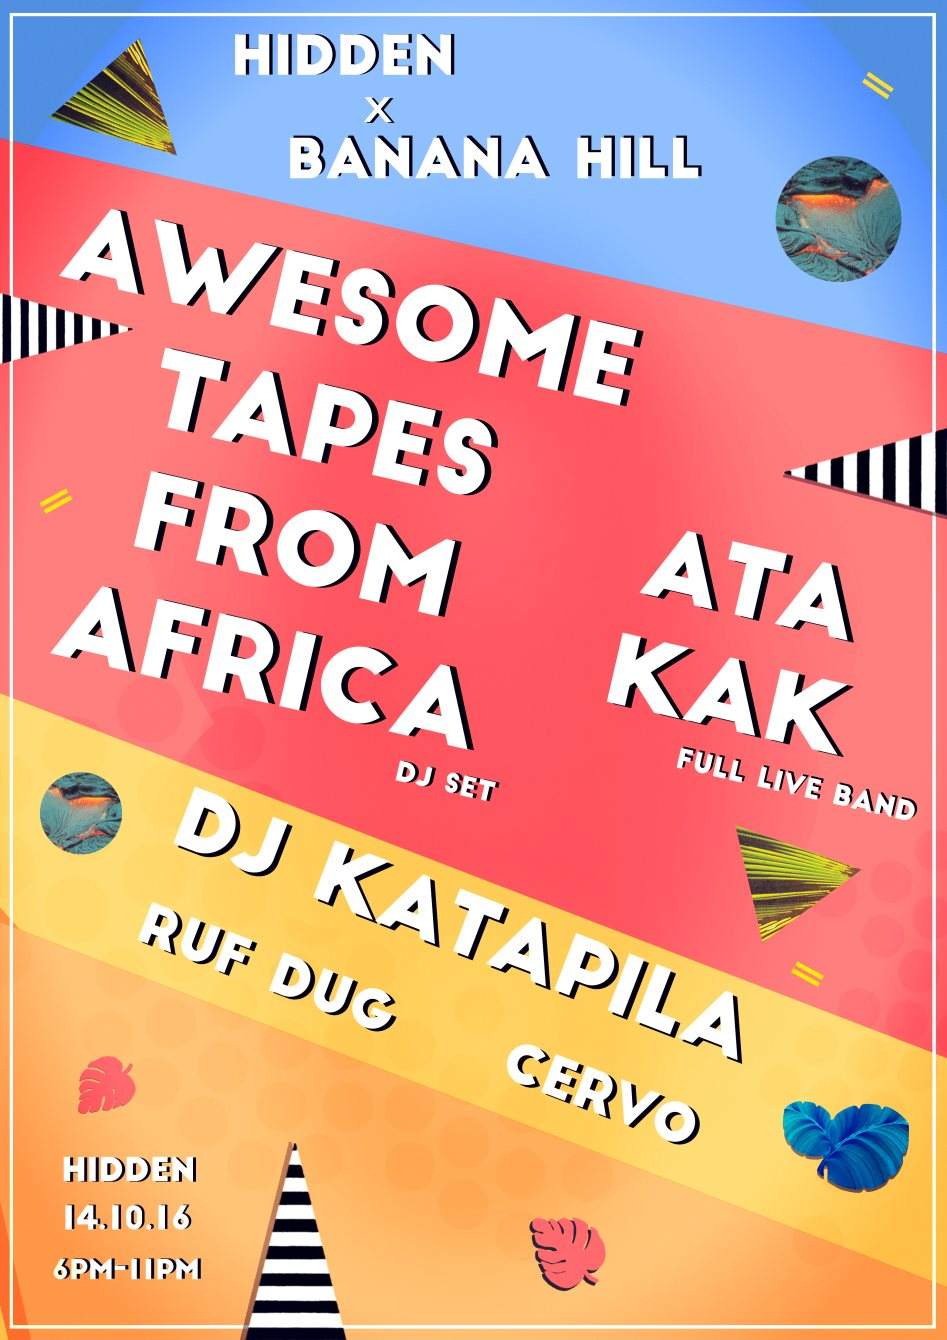 Hidden X Banana Hill - Awesome Tapes From Africa, Ata Kak, DJ Katpila, Ruf Dug - Página frontal